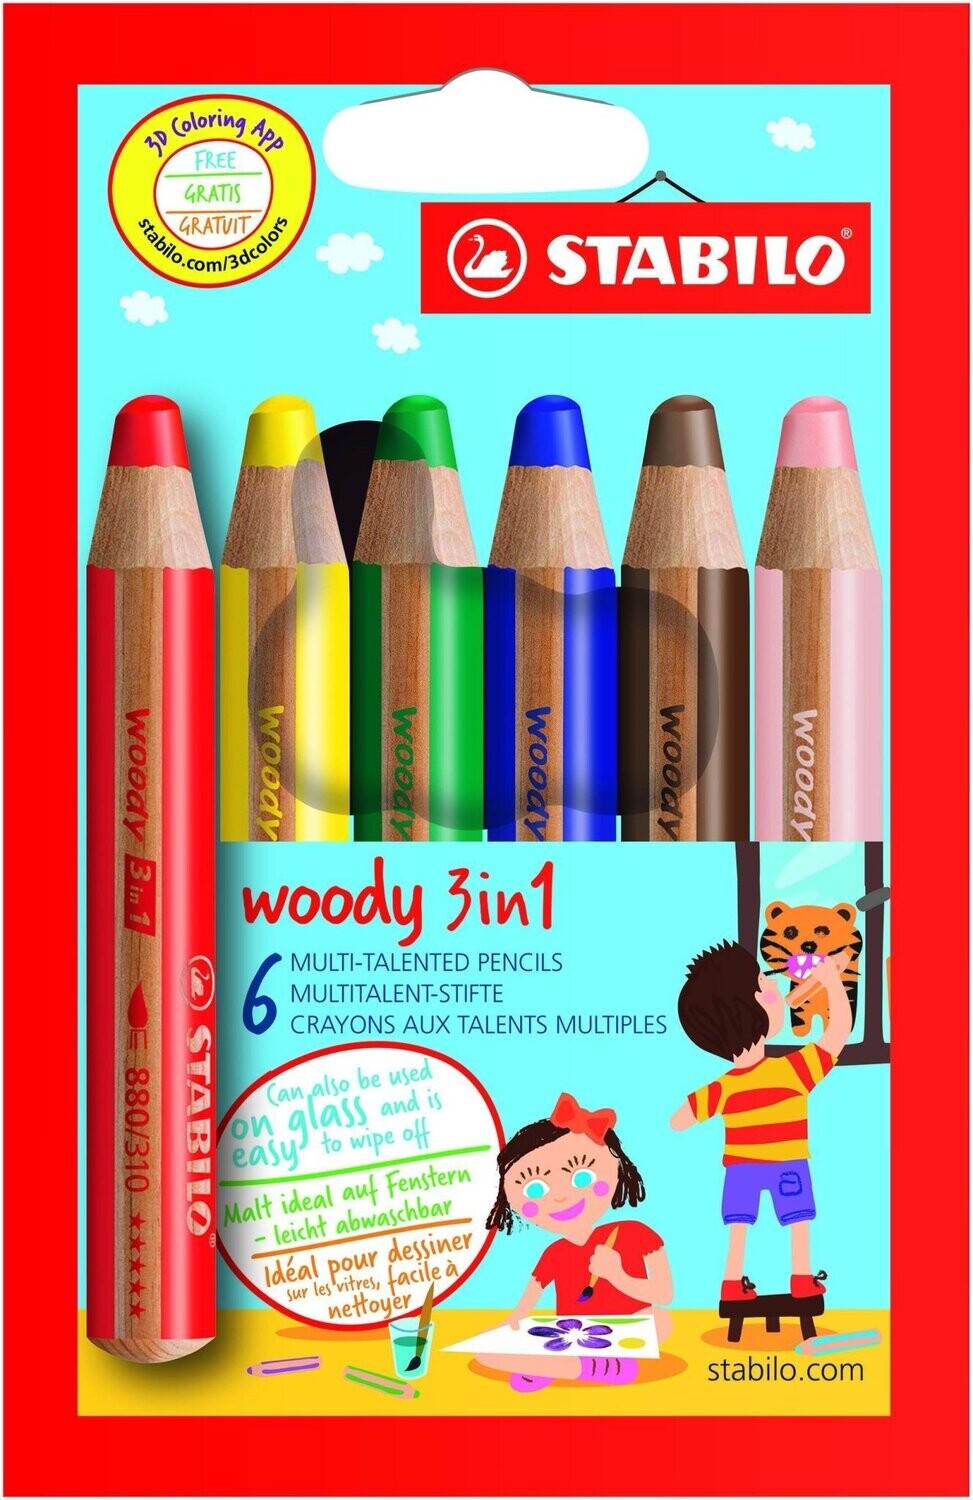 STABILO Multi-talented pencils (PK of 6)